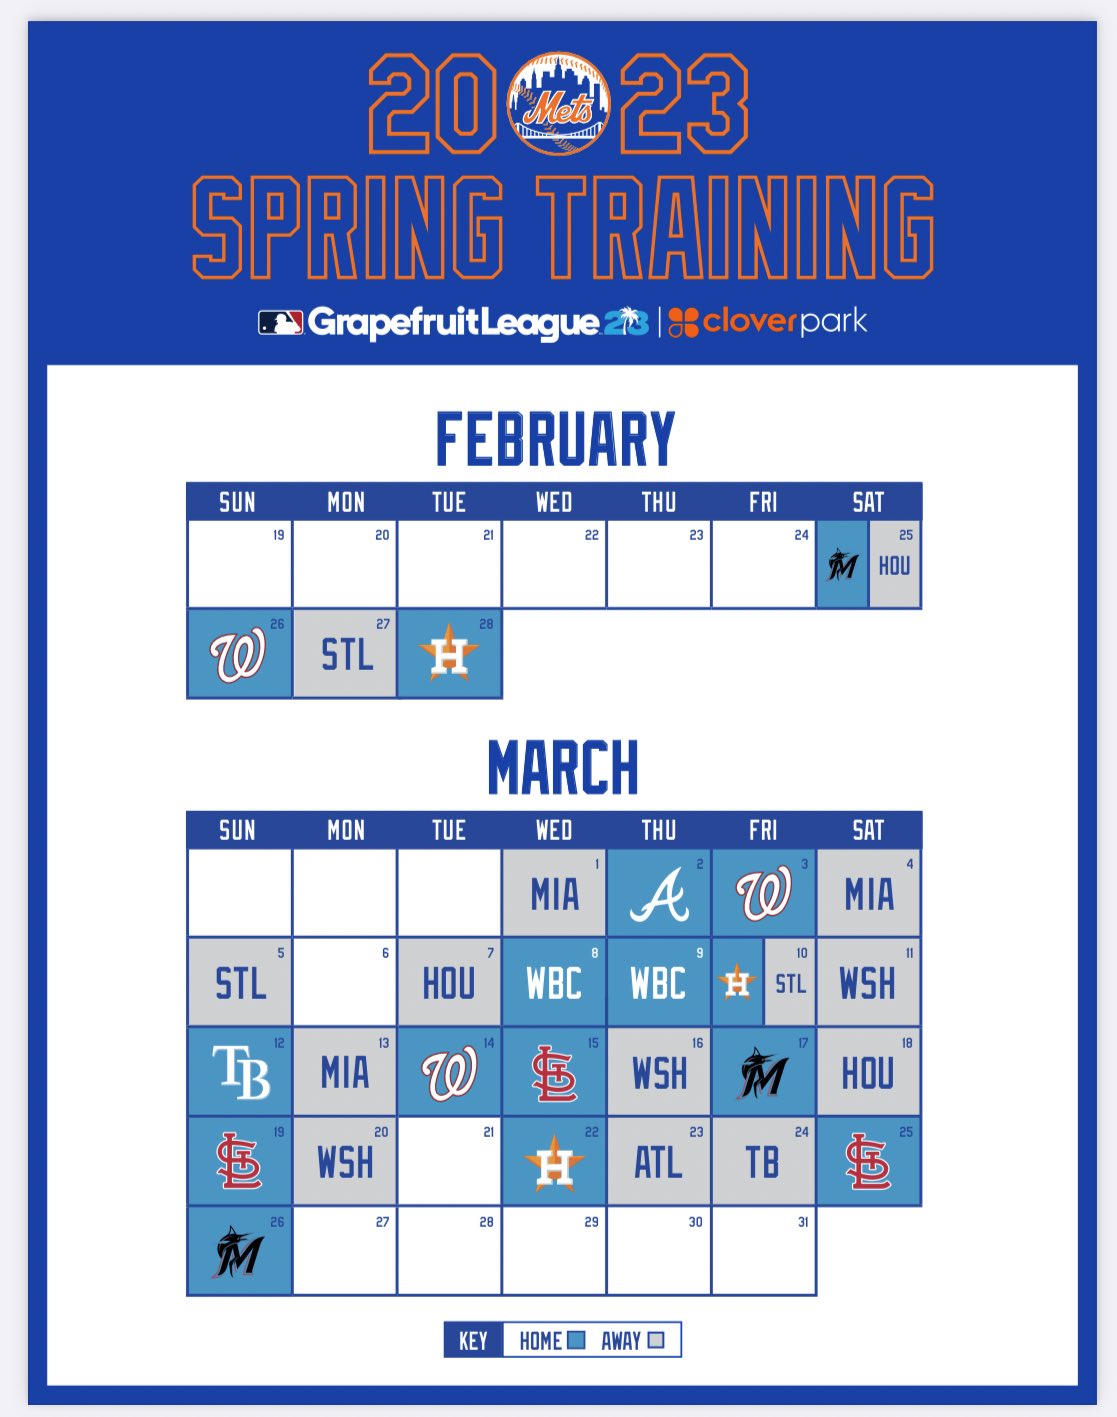 Metsmerized Online on X: Here's the Mets Spring Training schedule